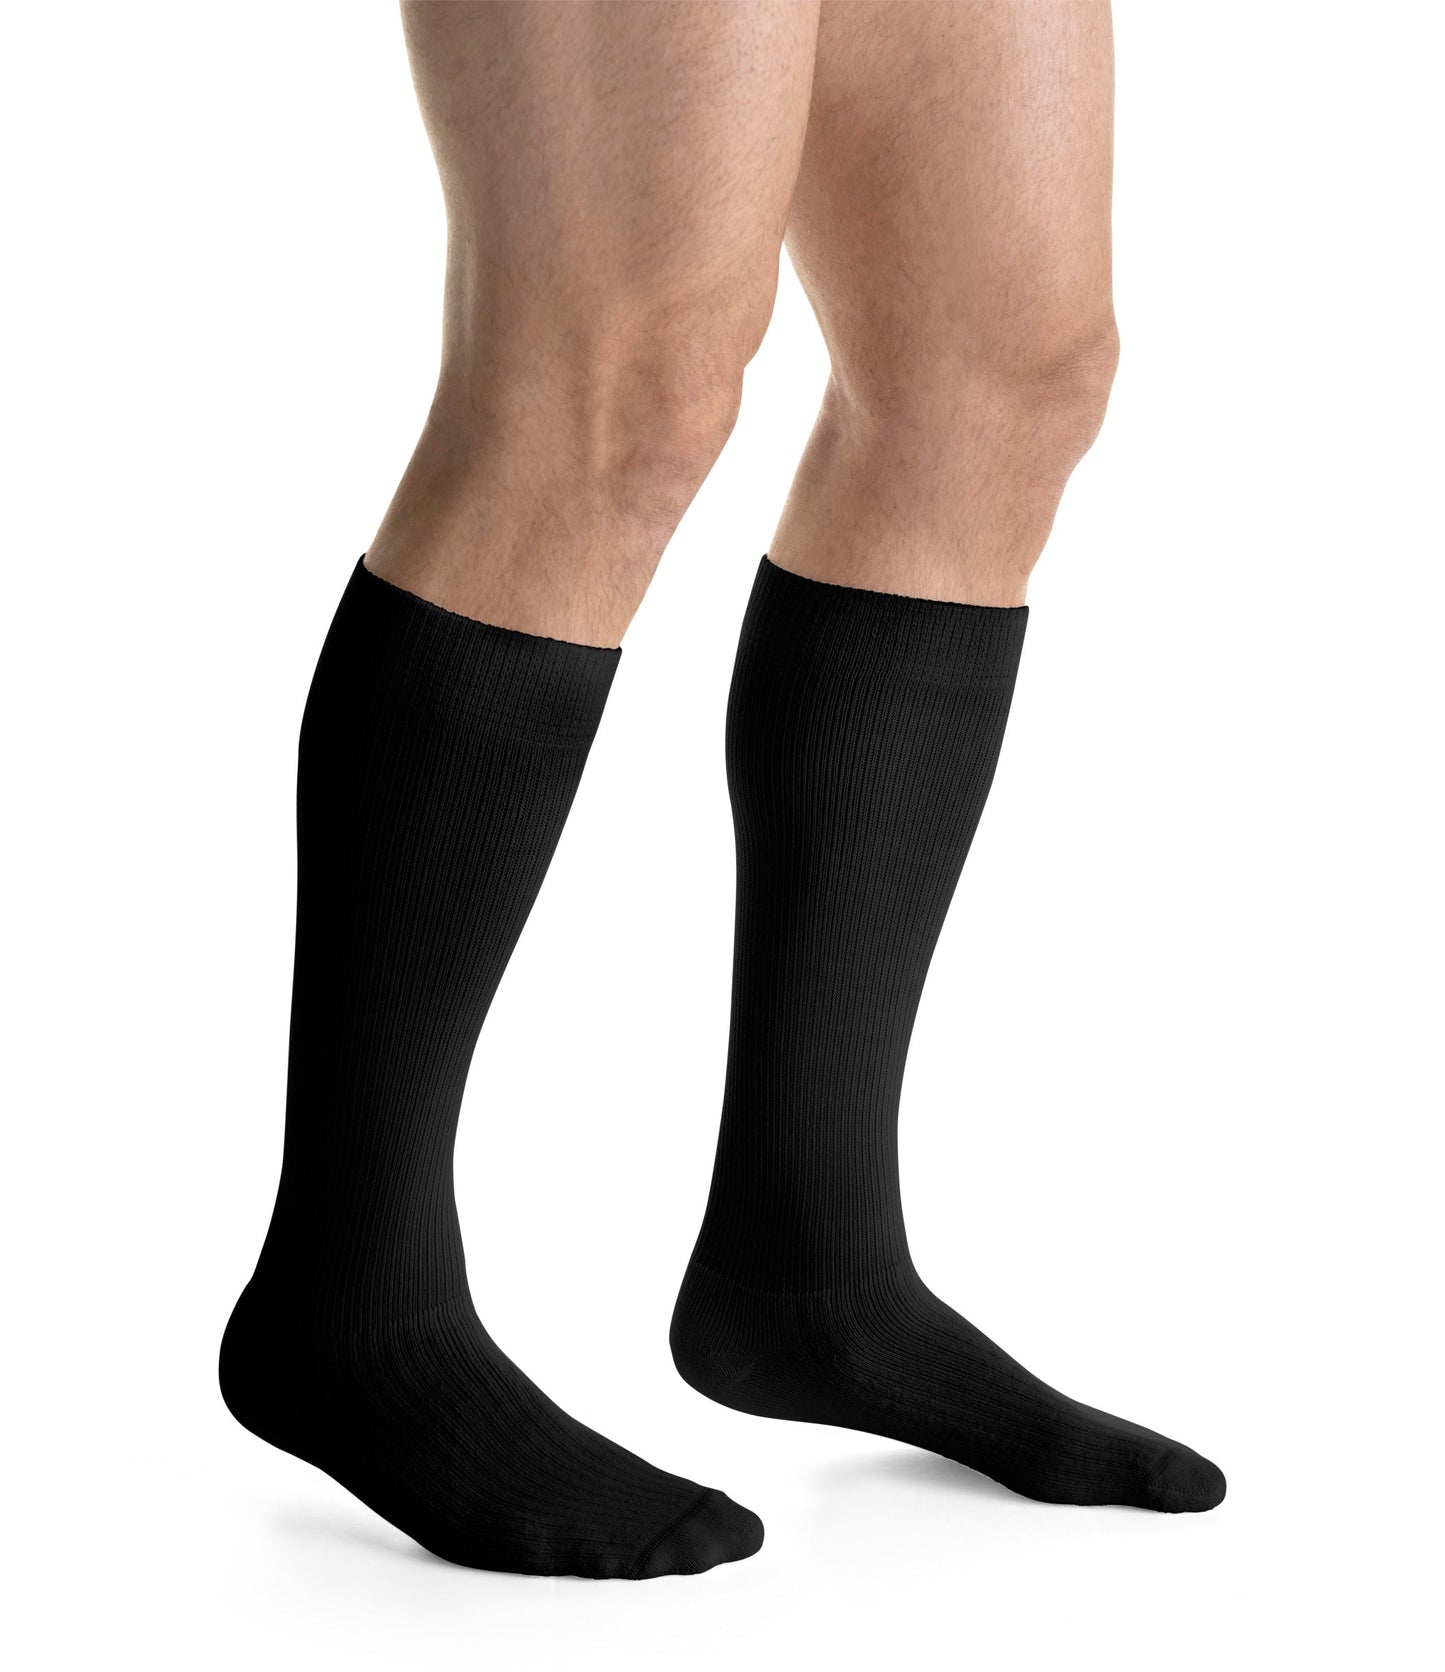 JOBST ActiveWear Compression Socks 30-40 mmHg Knee High Closed Toe Full Calf